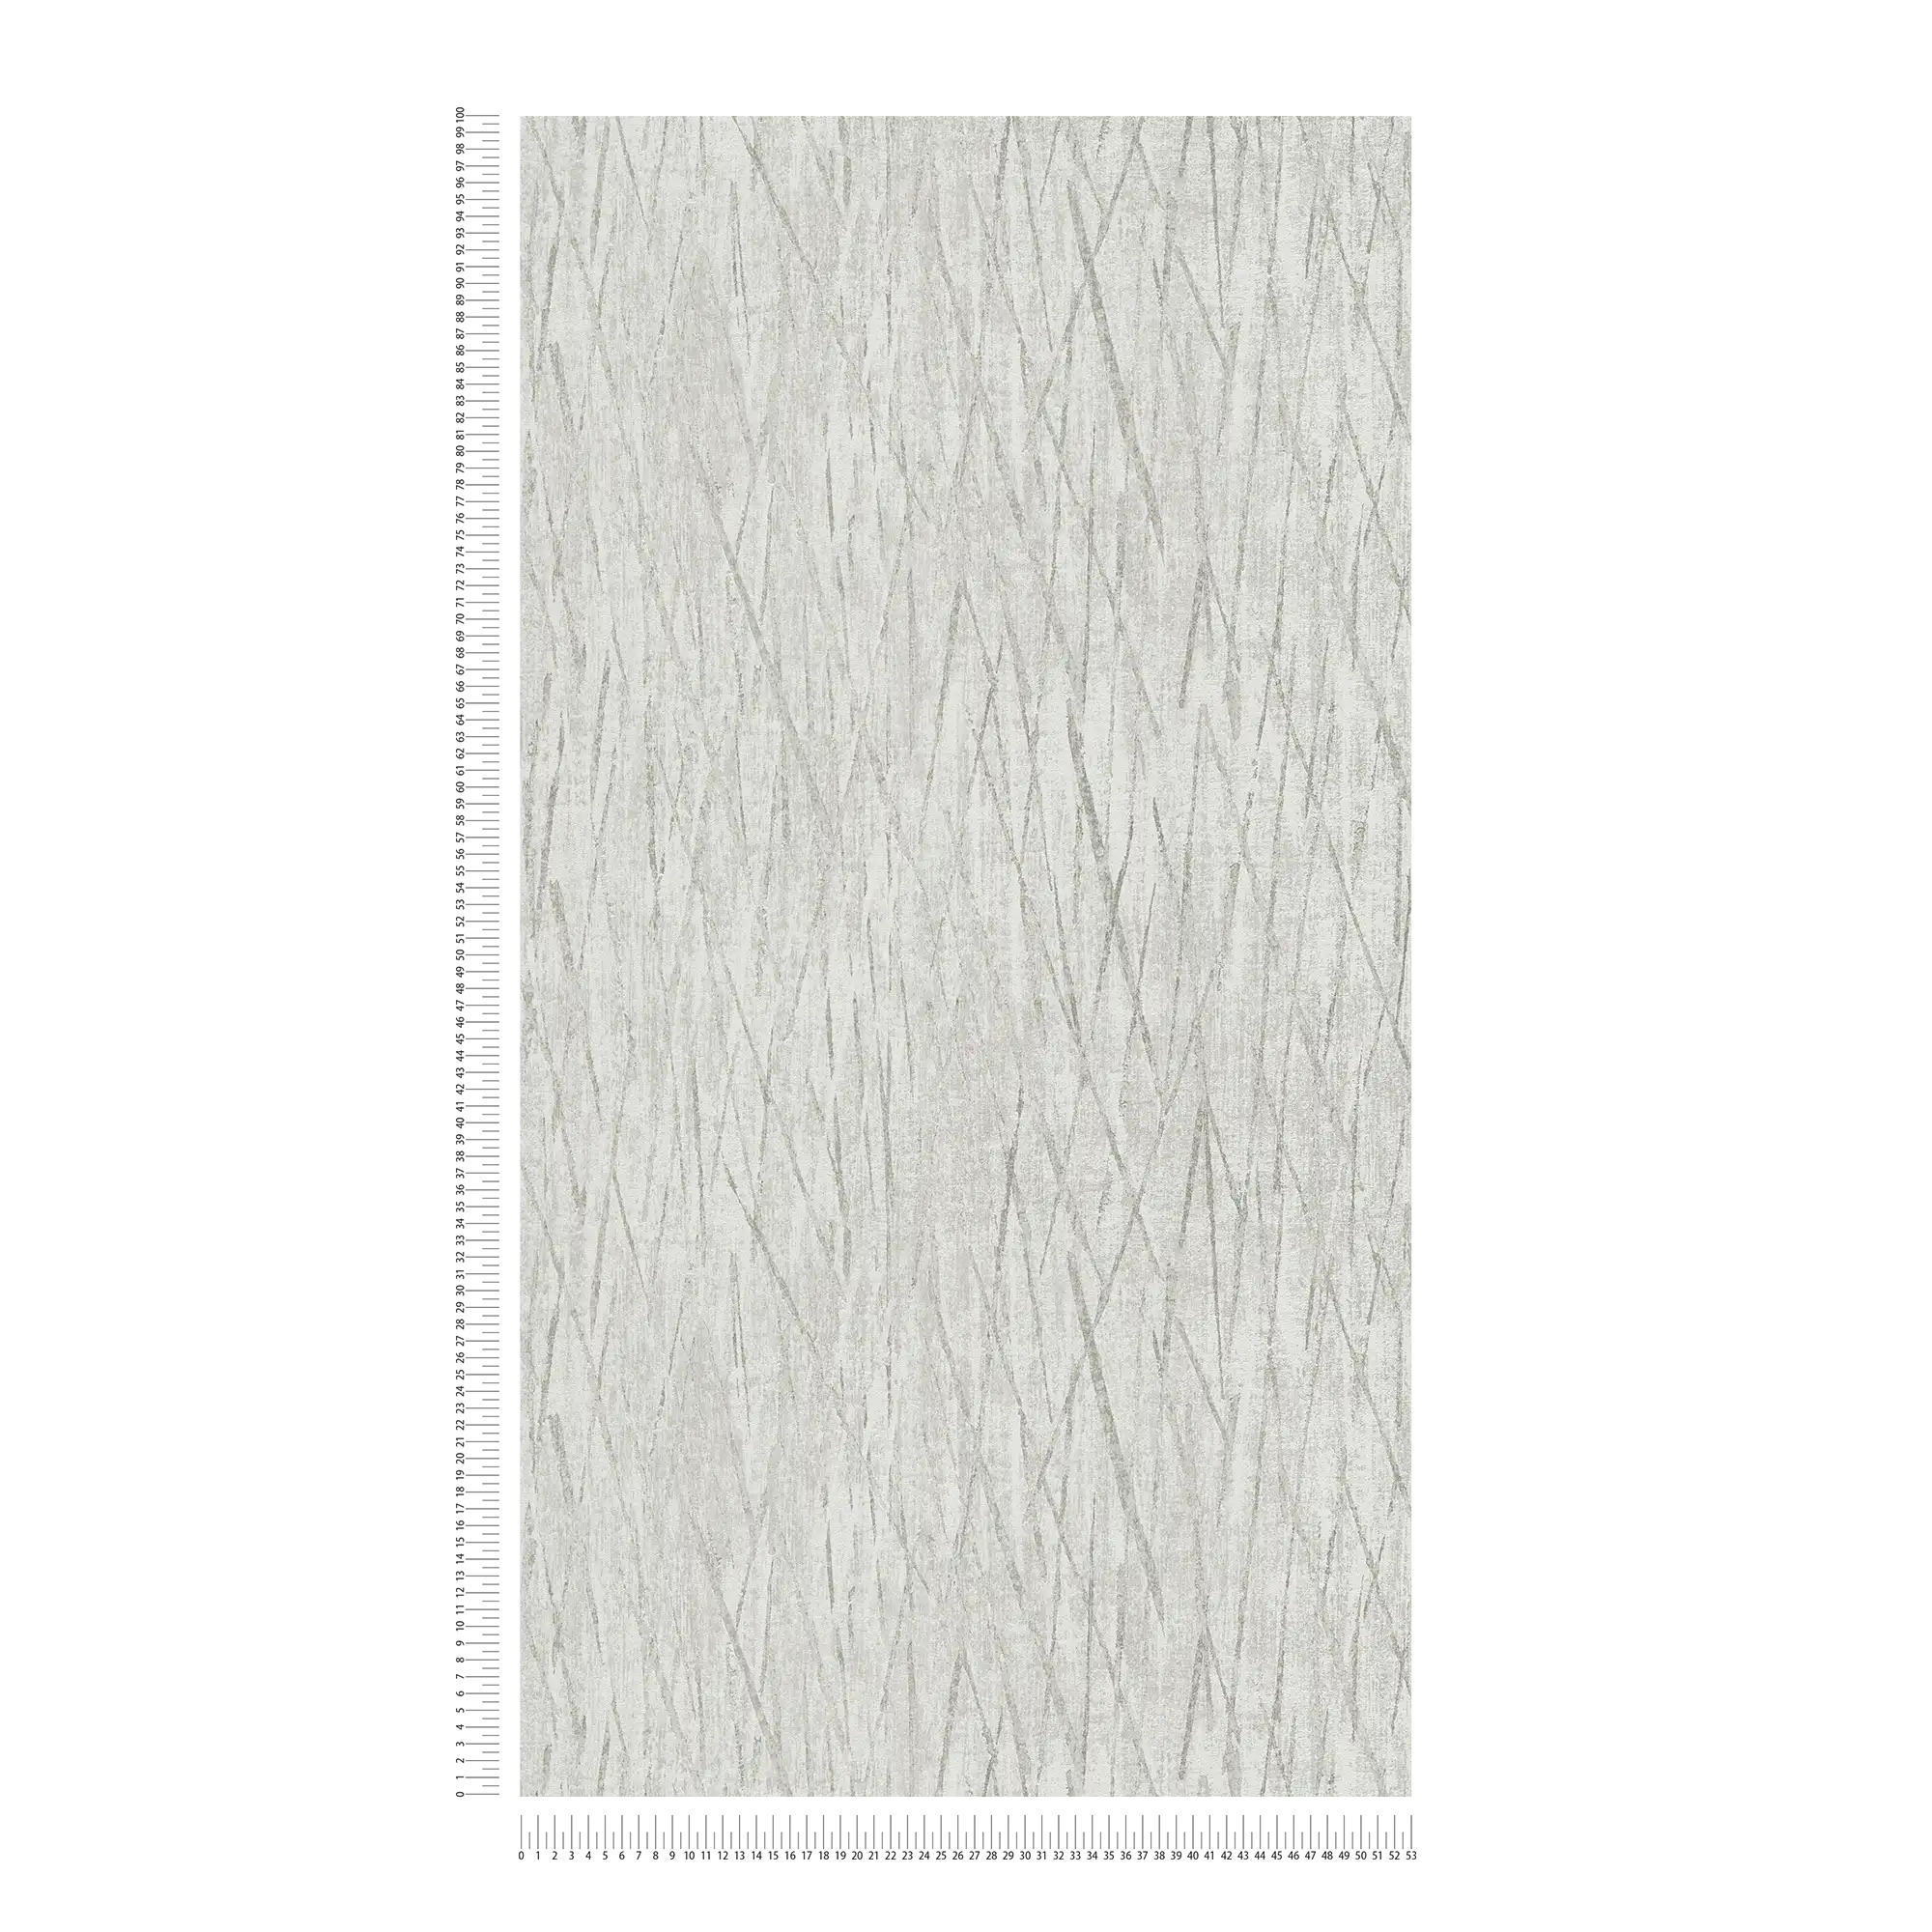             Textured wallpaper with metallic colours - grey, metallic
        